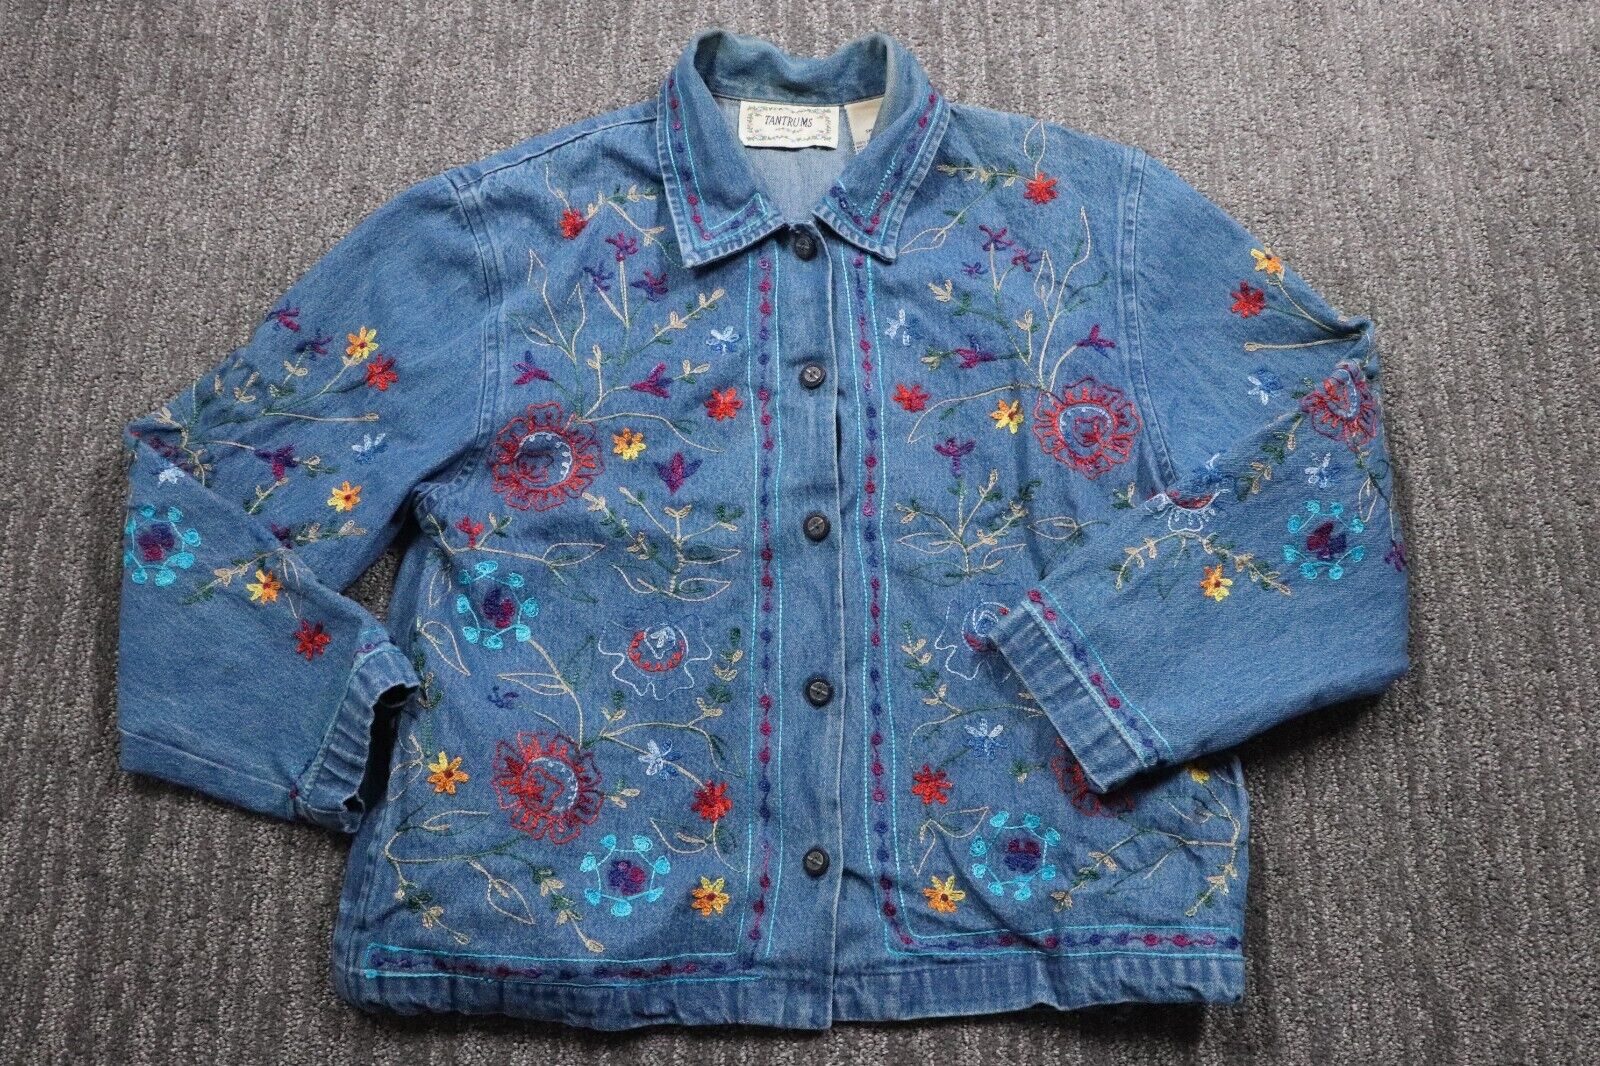 Tantrums Vintage Denim Jacket Floral Embroidered Boxy Fit Outdoor Women's S